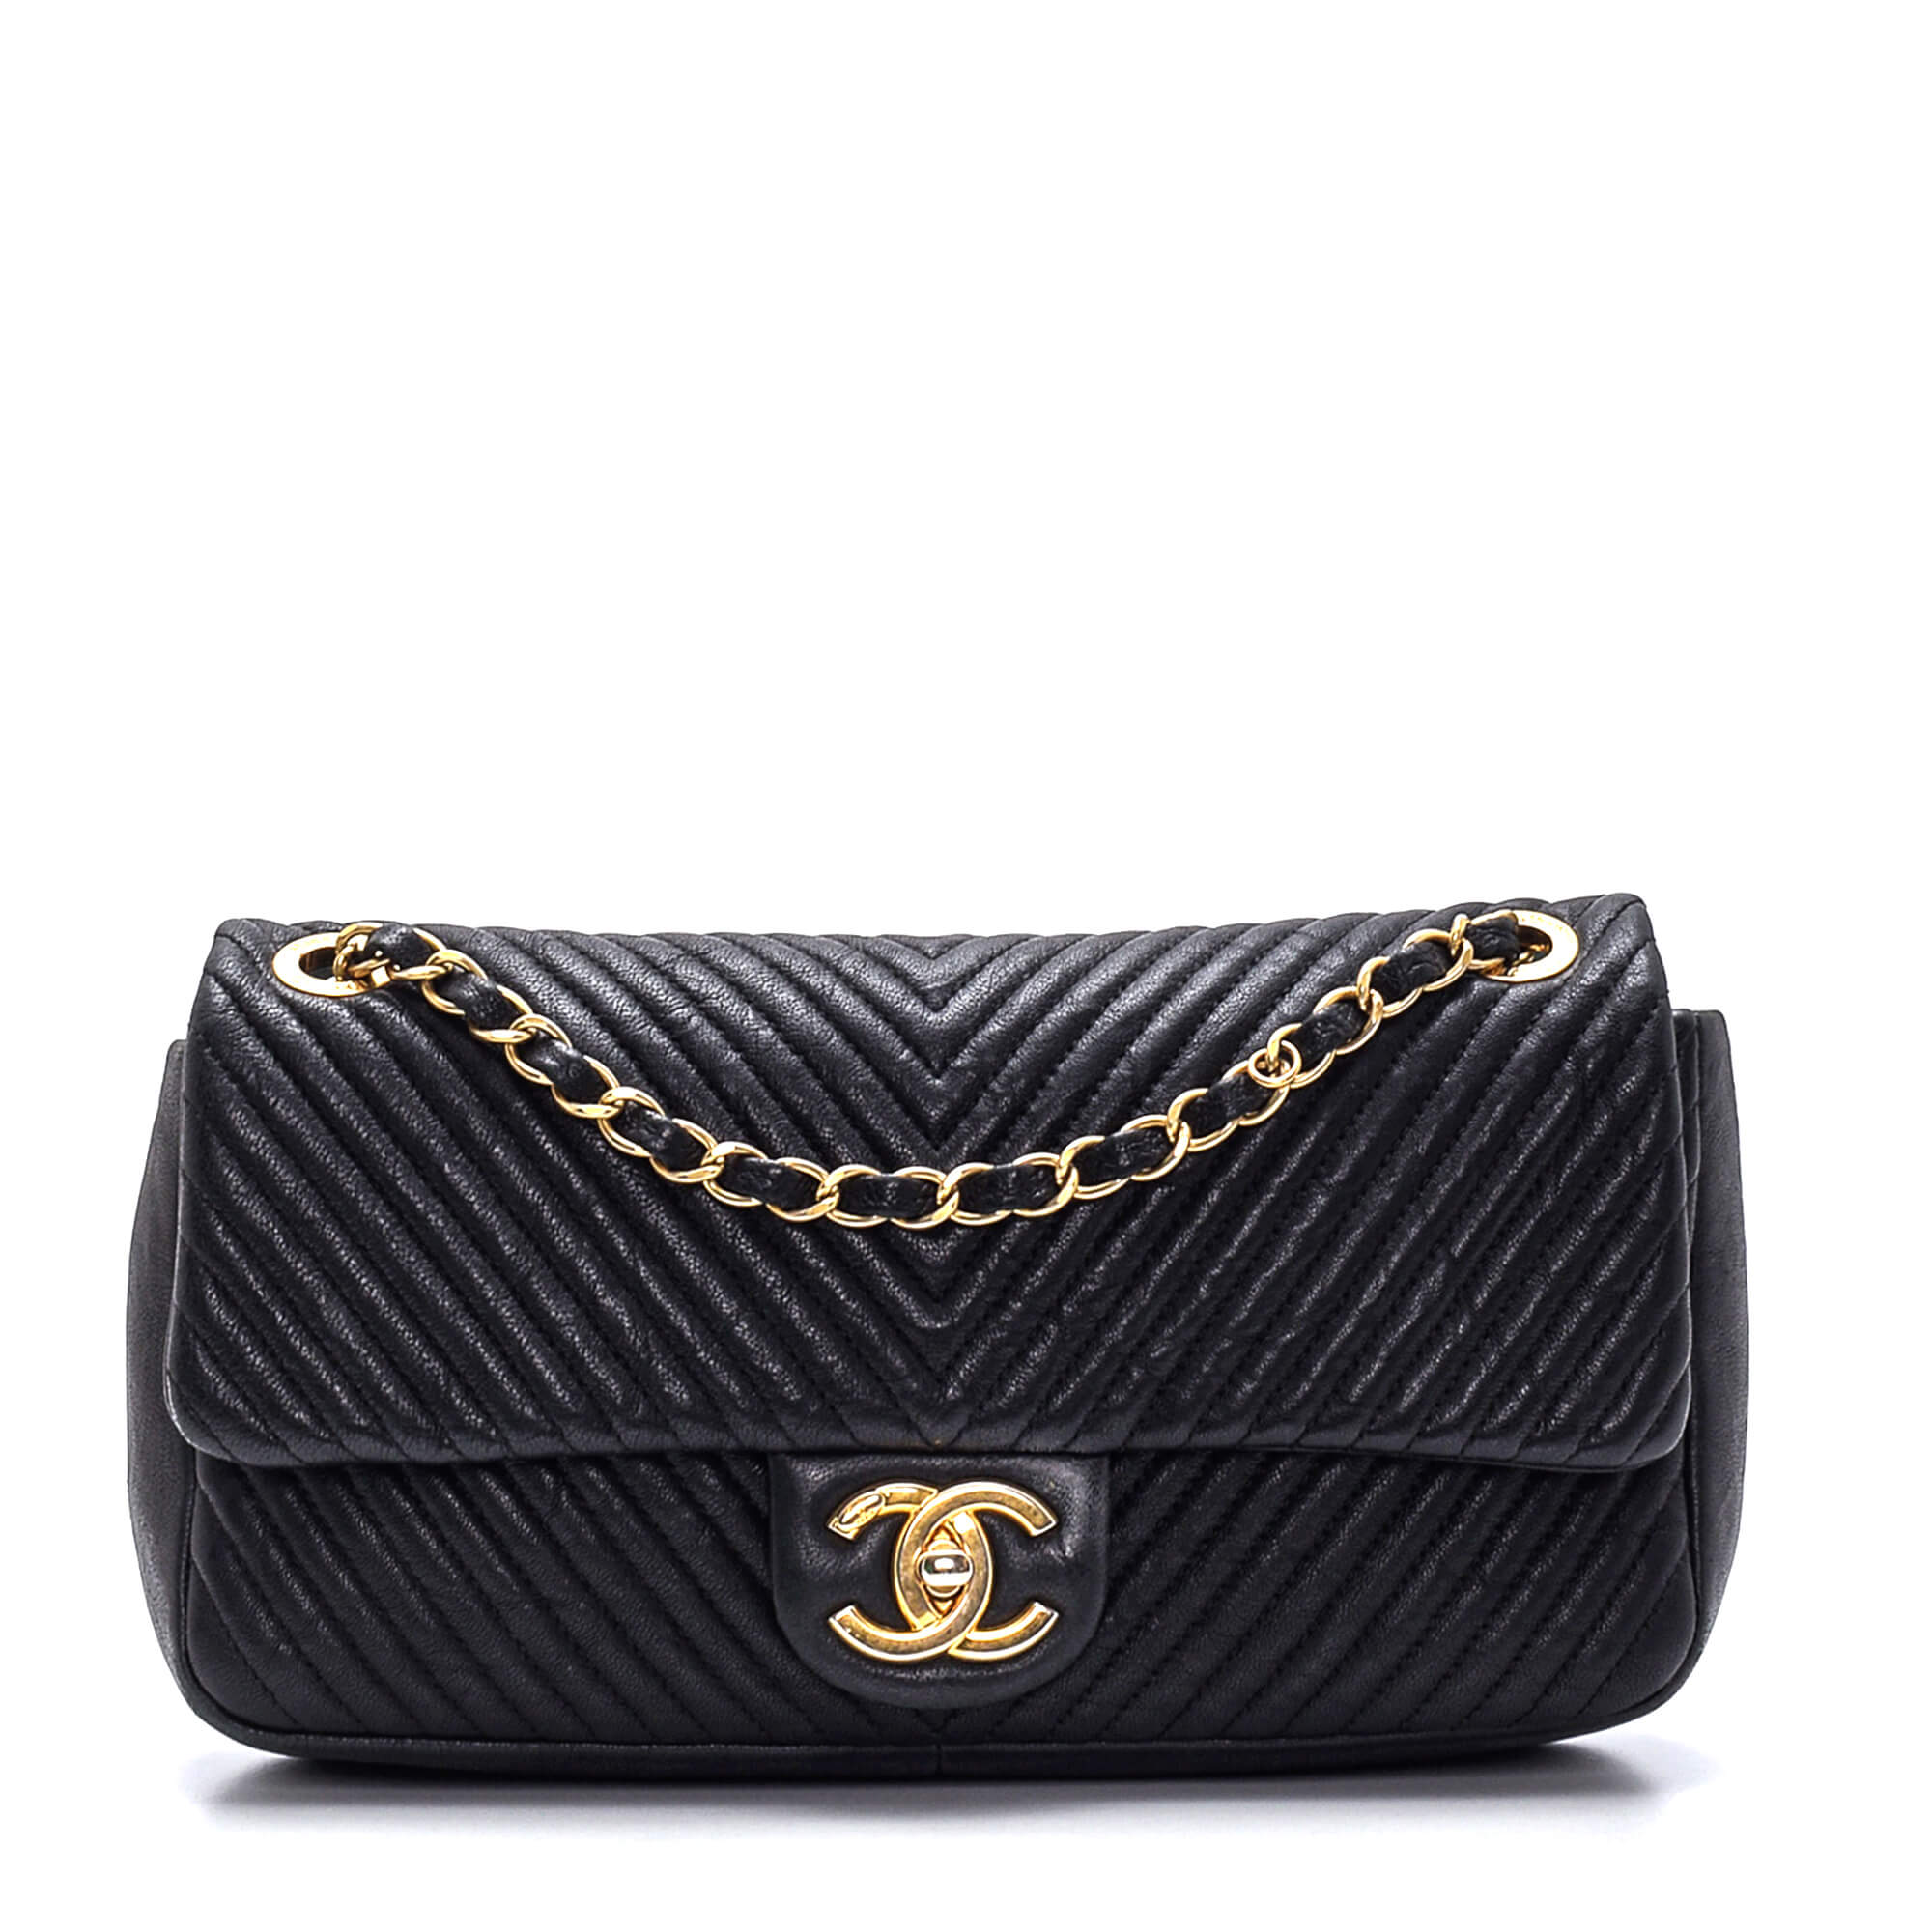 Chanel - Black Chevron Lambskin Leather Single Flap Bag 